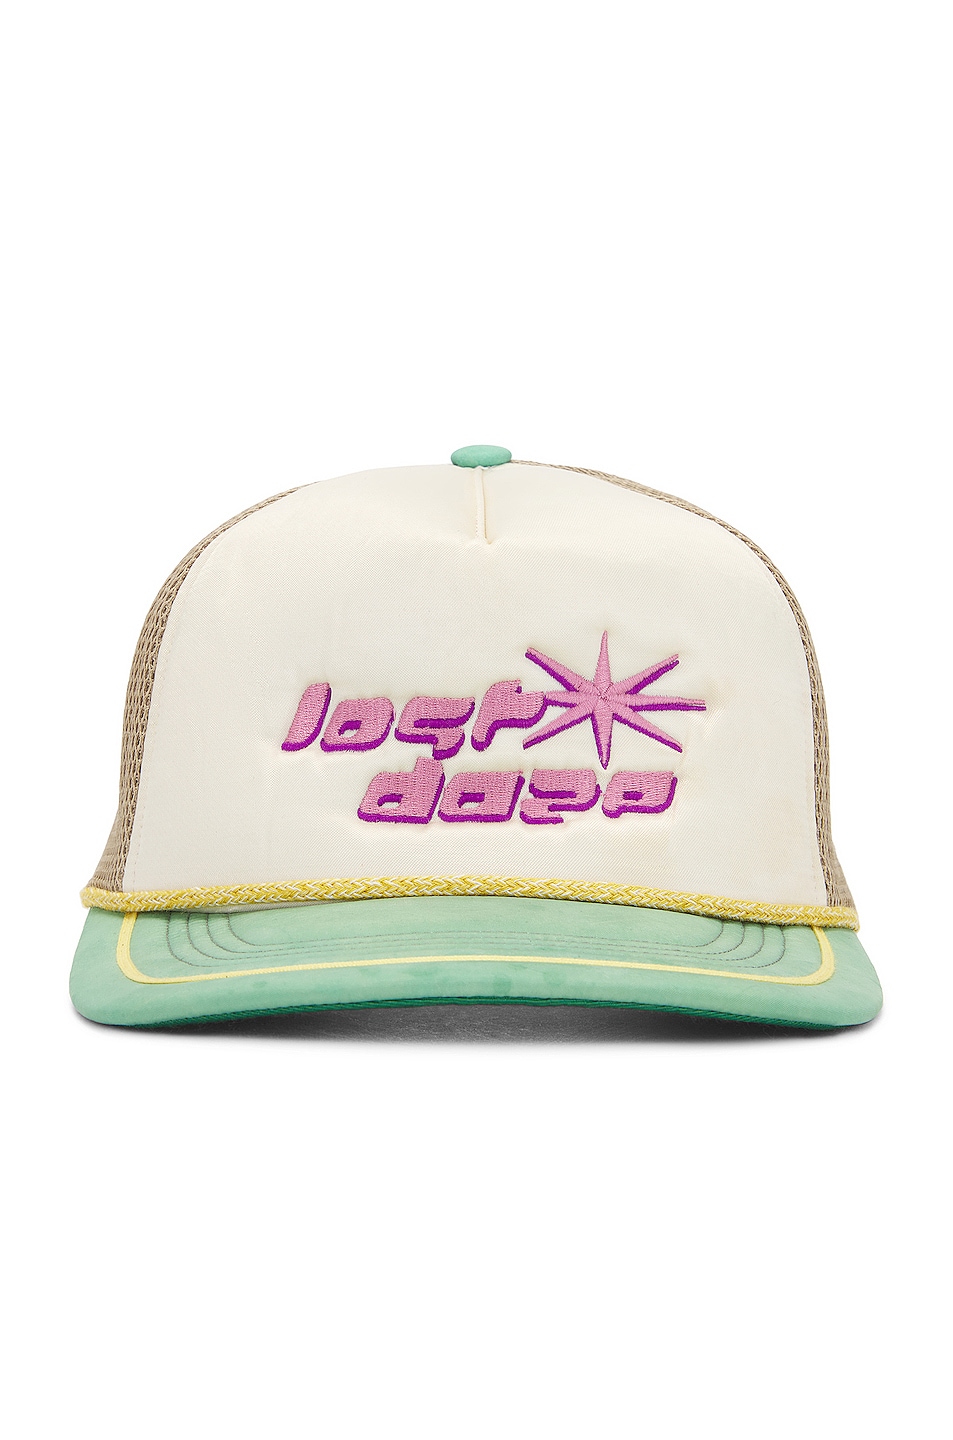 Nostalgia Trucker Hat in Cream